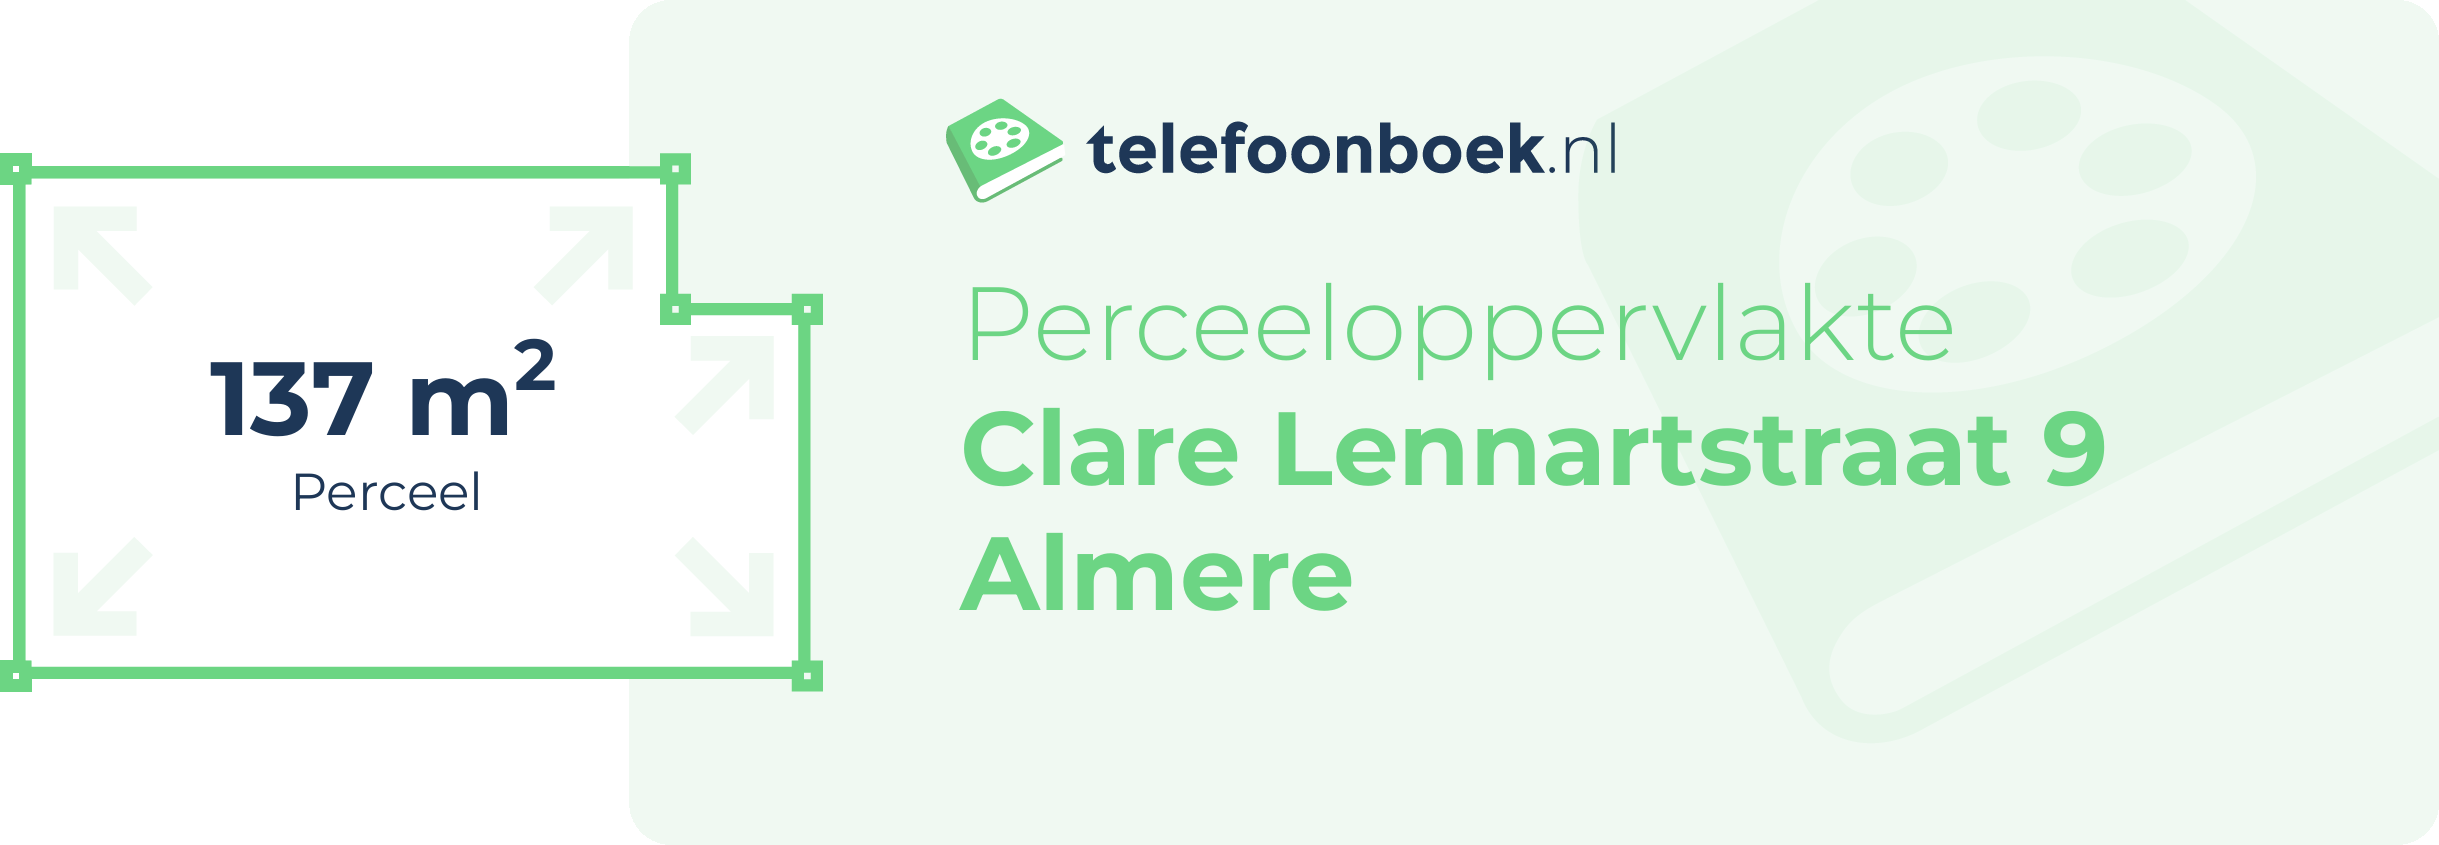 Perceeloppervlakte Clare Lennartstraat 9 Almere